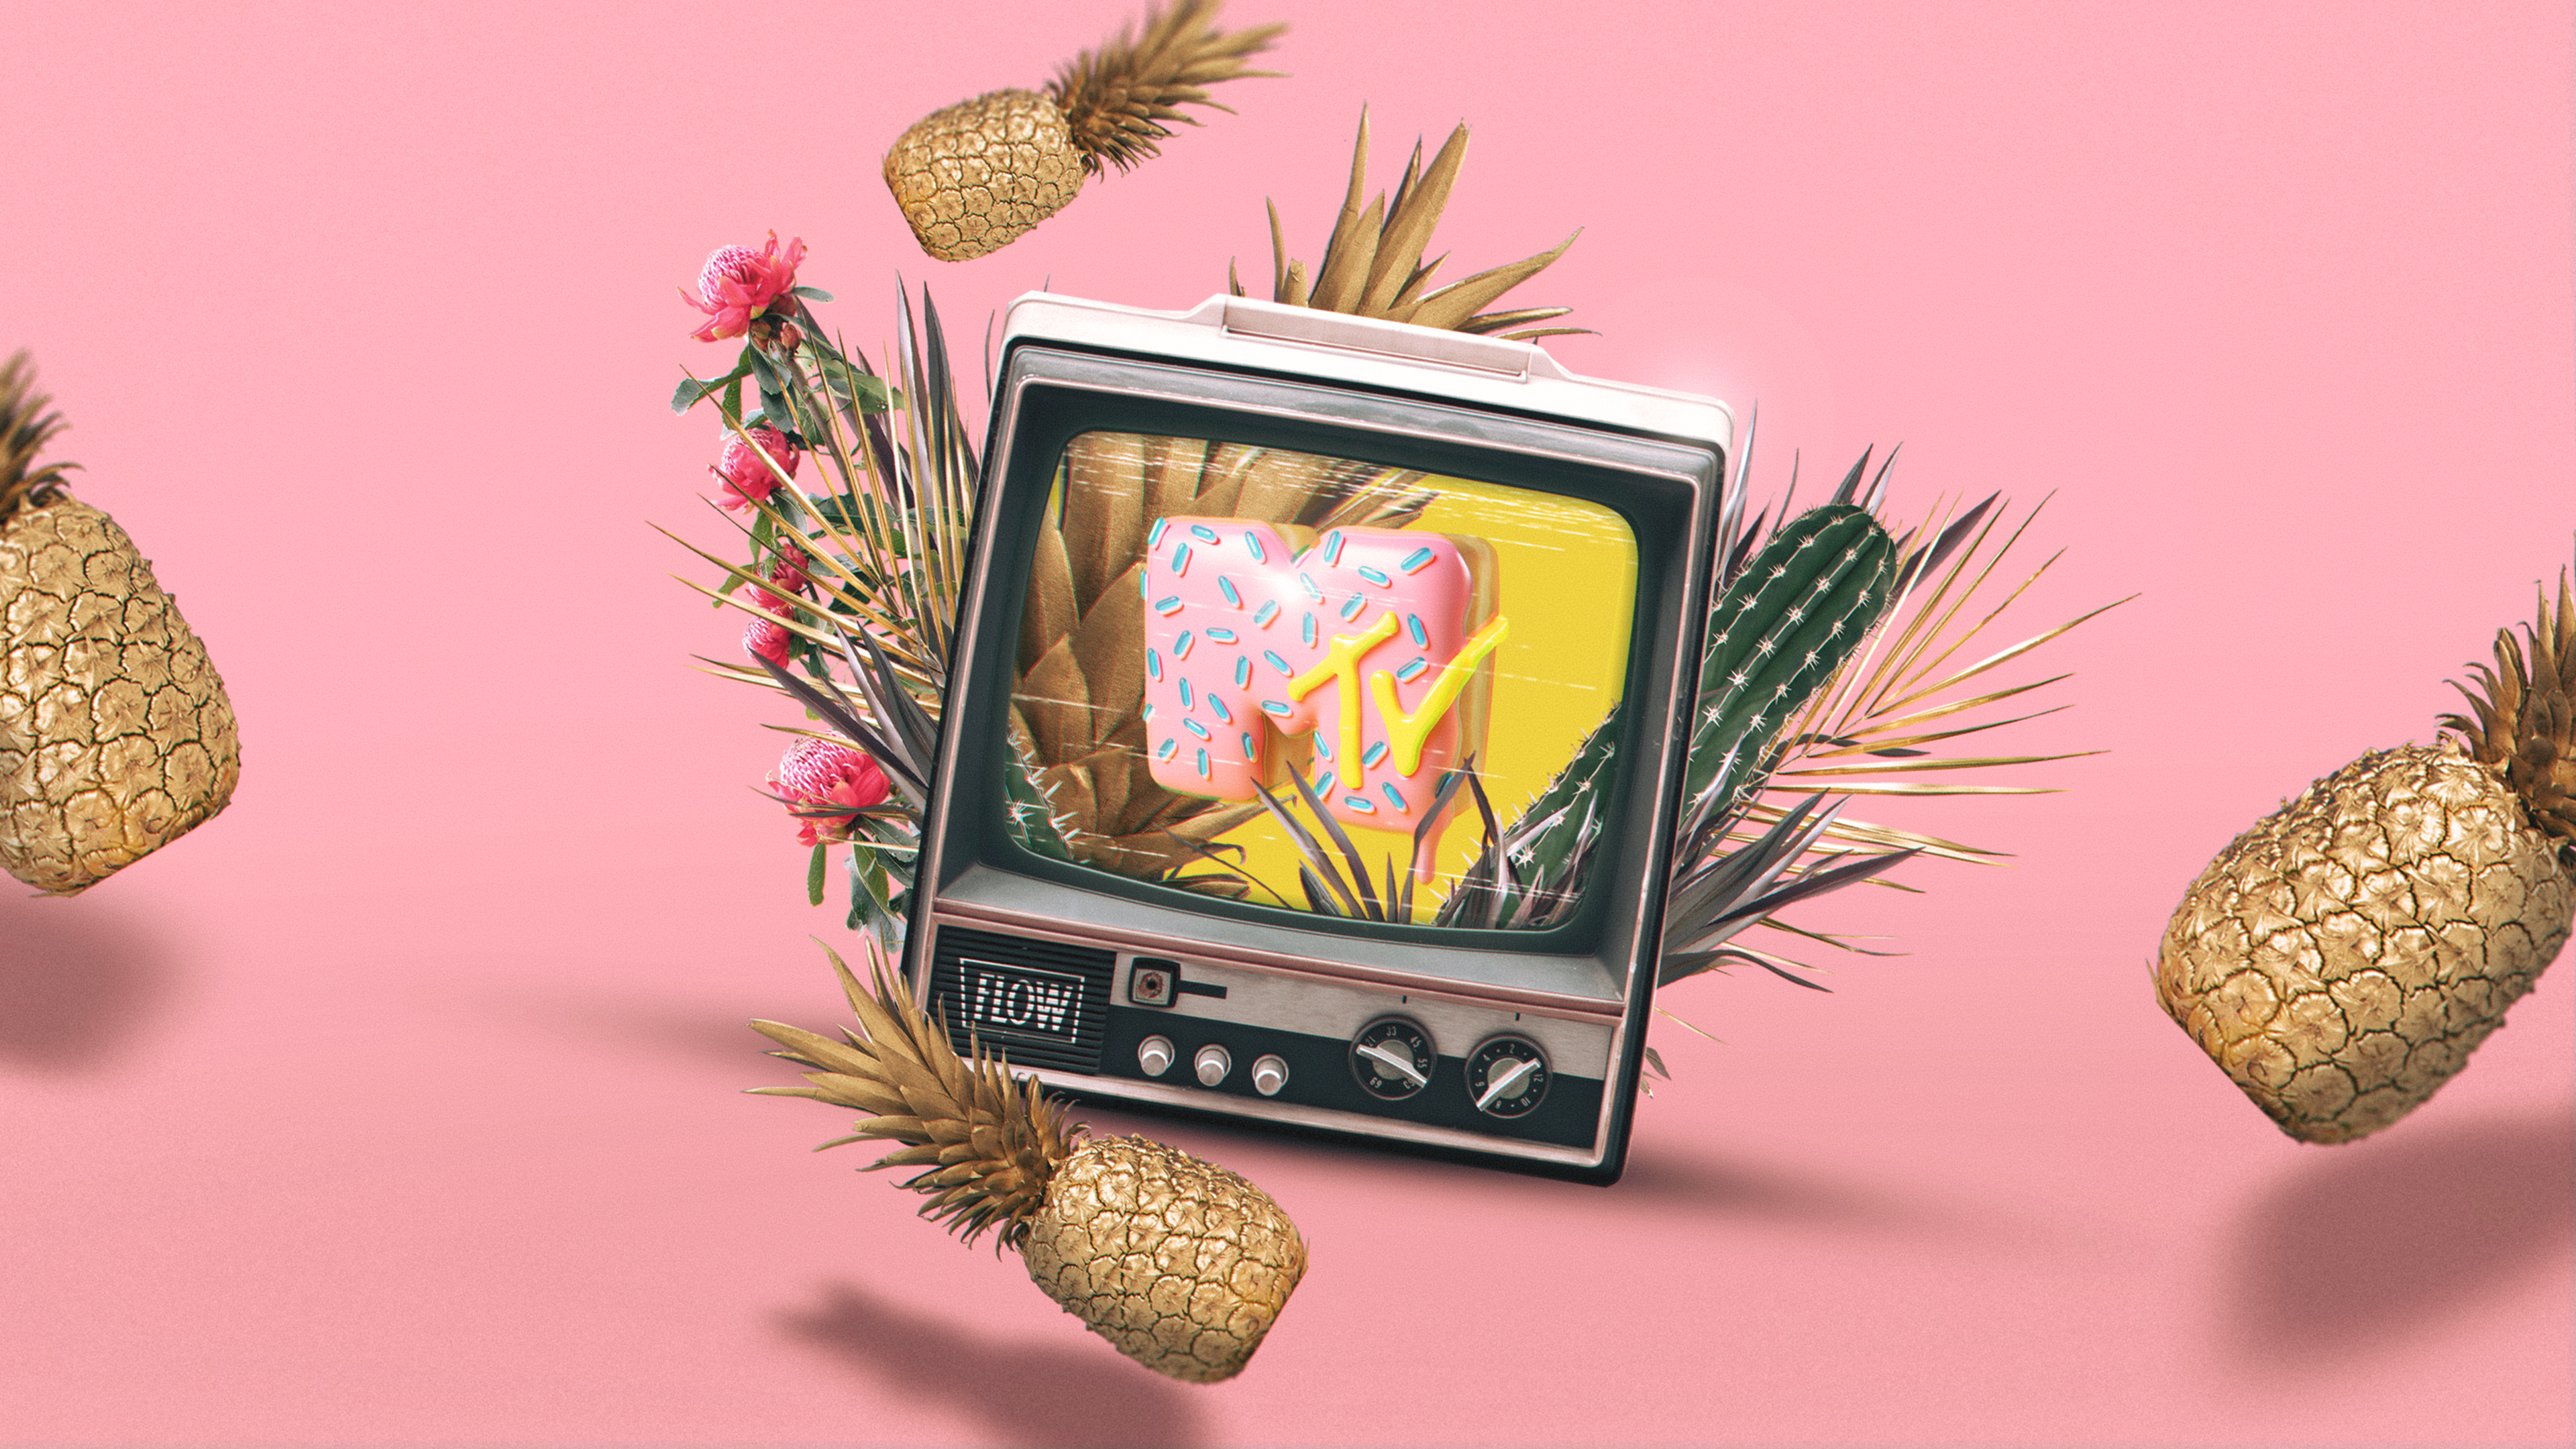 Digital Pineapple Cactus Flowers MTV Music Pink Soft Shading Artwork 3D 3840x2160